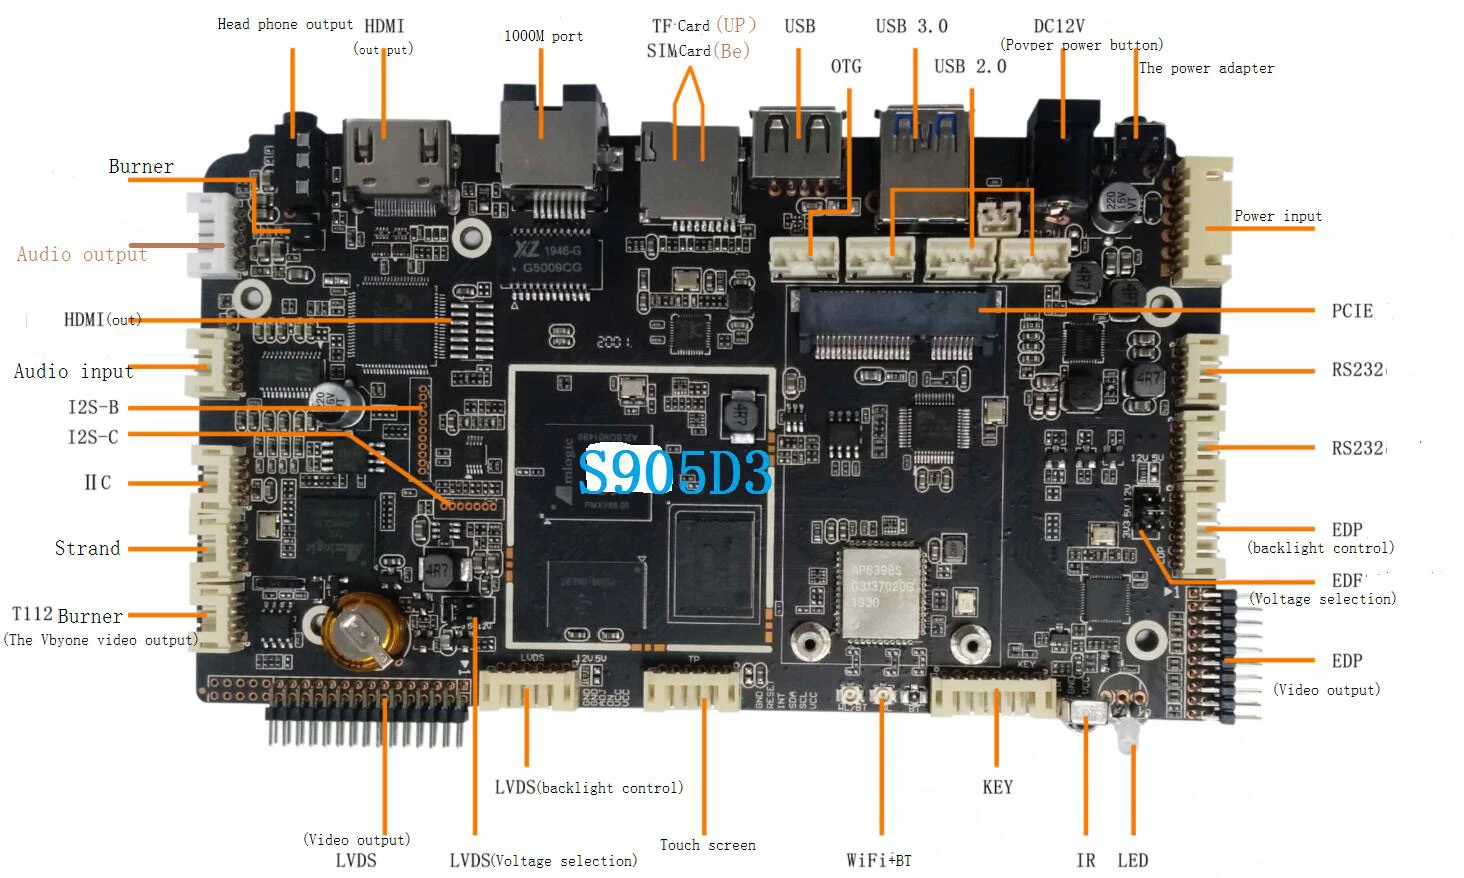 Amlogic S905D3 数字标牌板配备 HDMI、LVDS、V-by-One